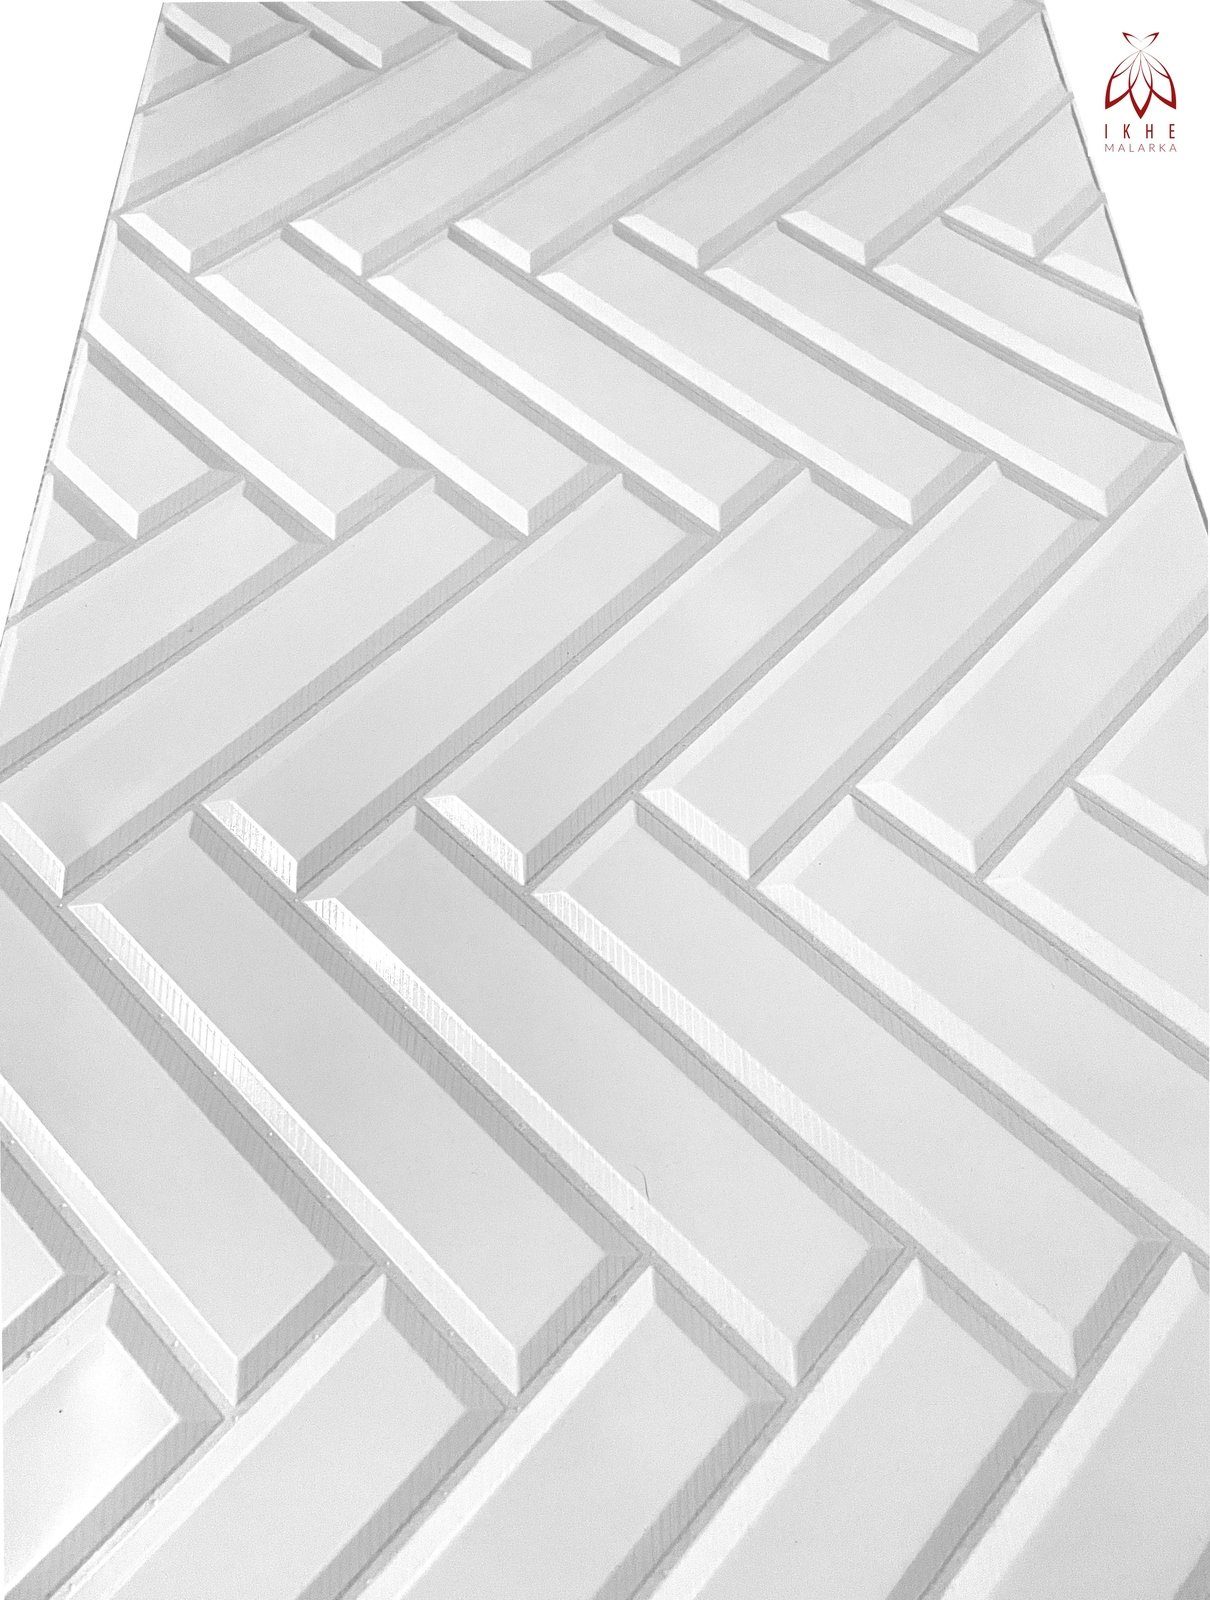 0,41 BxL: Mosaik IKHEMalarka 3D Wandpaneele, PVC 48,00x87,00 Tile Stück Verkleidung qm, Deckenpaneele Imitation cm, 3D Wandverkleidung Wandpaneel 4,1qm/10 Gloss Fliesen